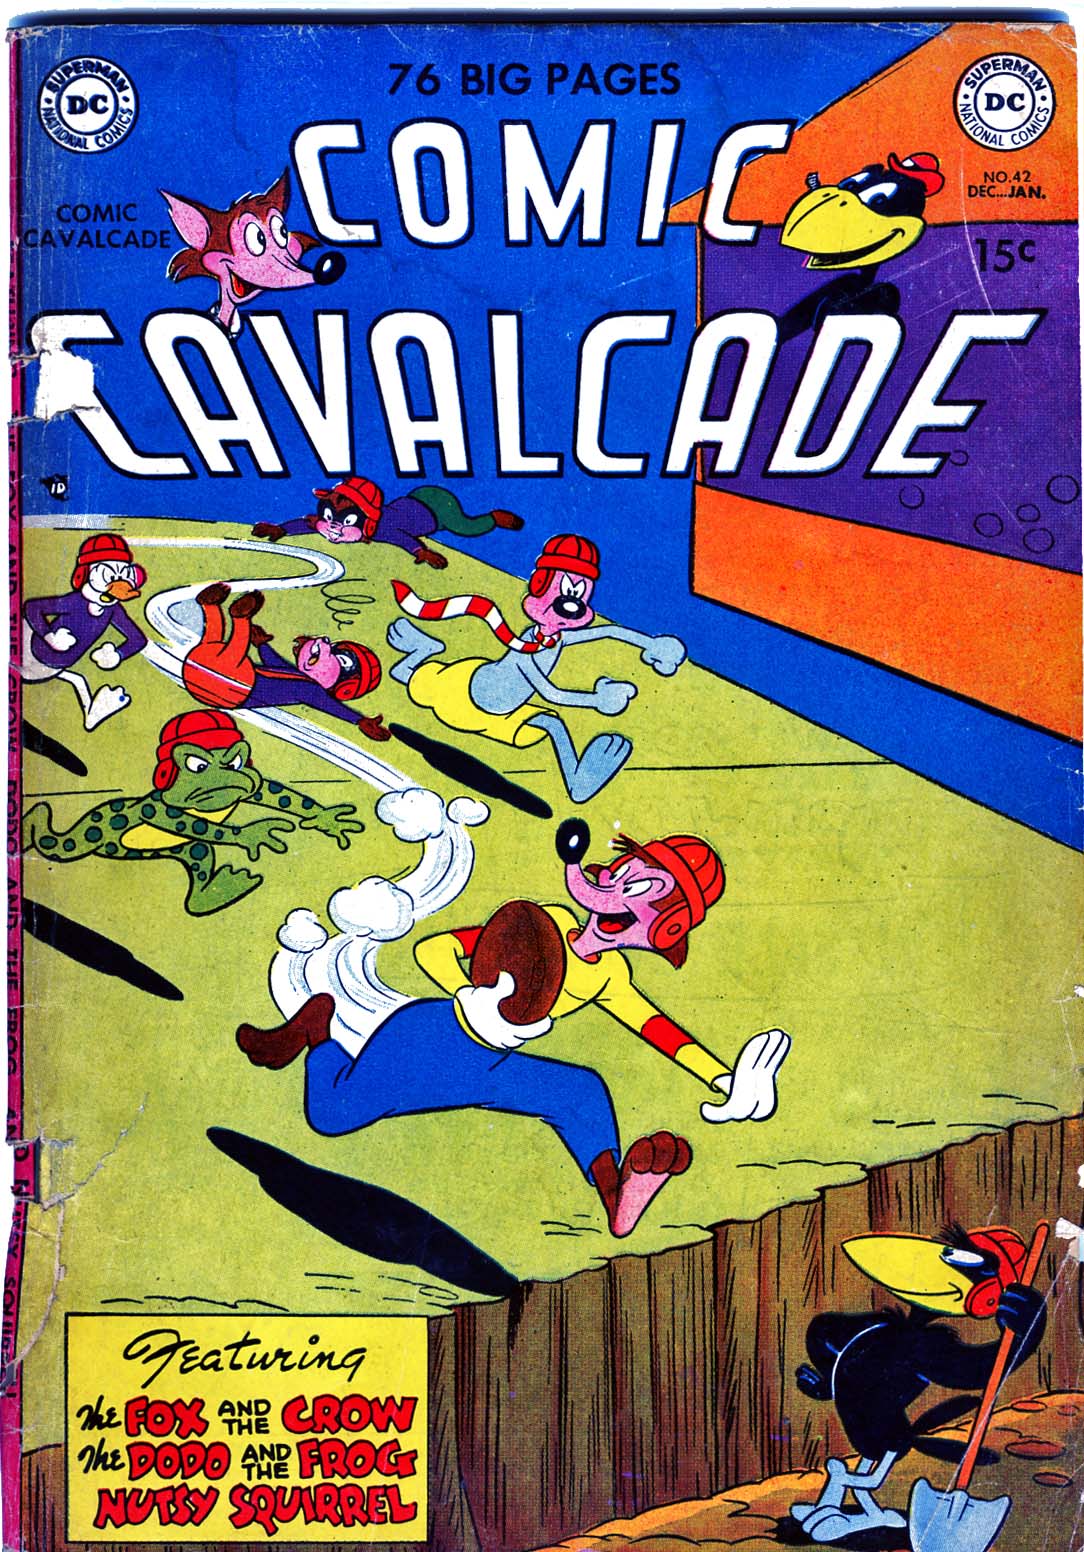 Comic Cavalcade issue 42 - Page 1